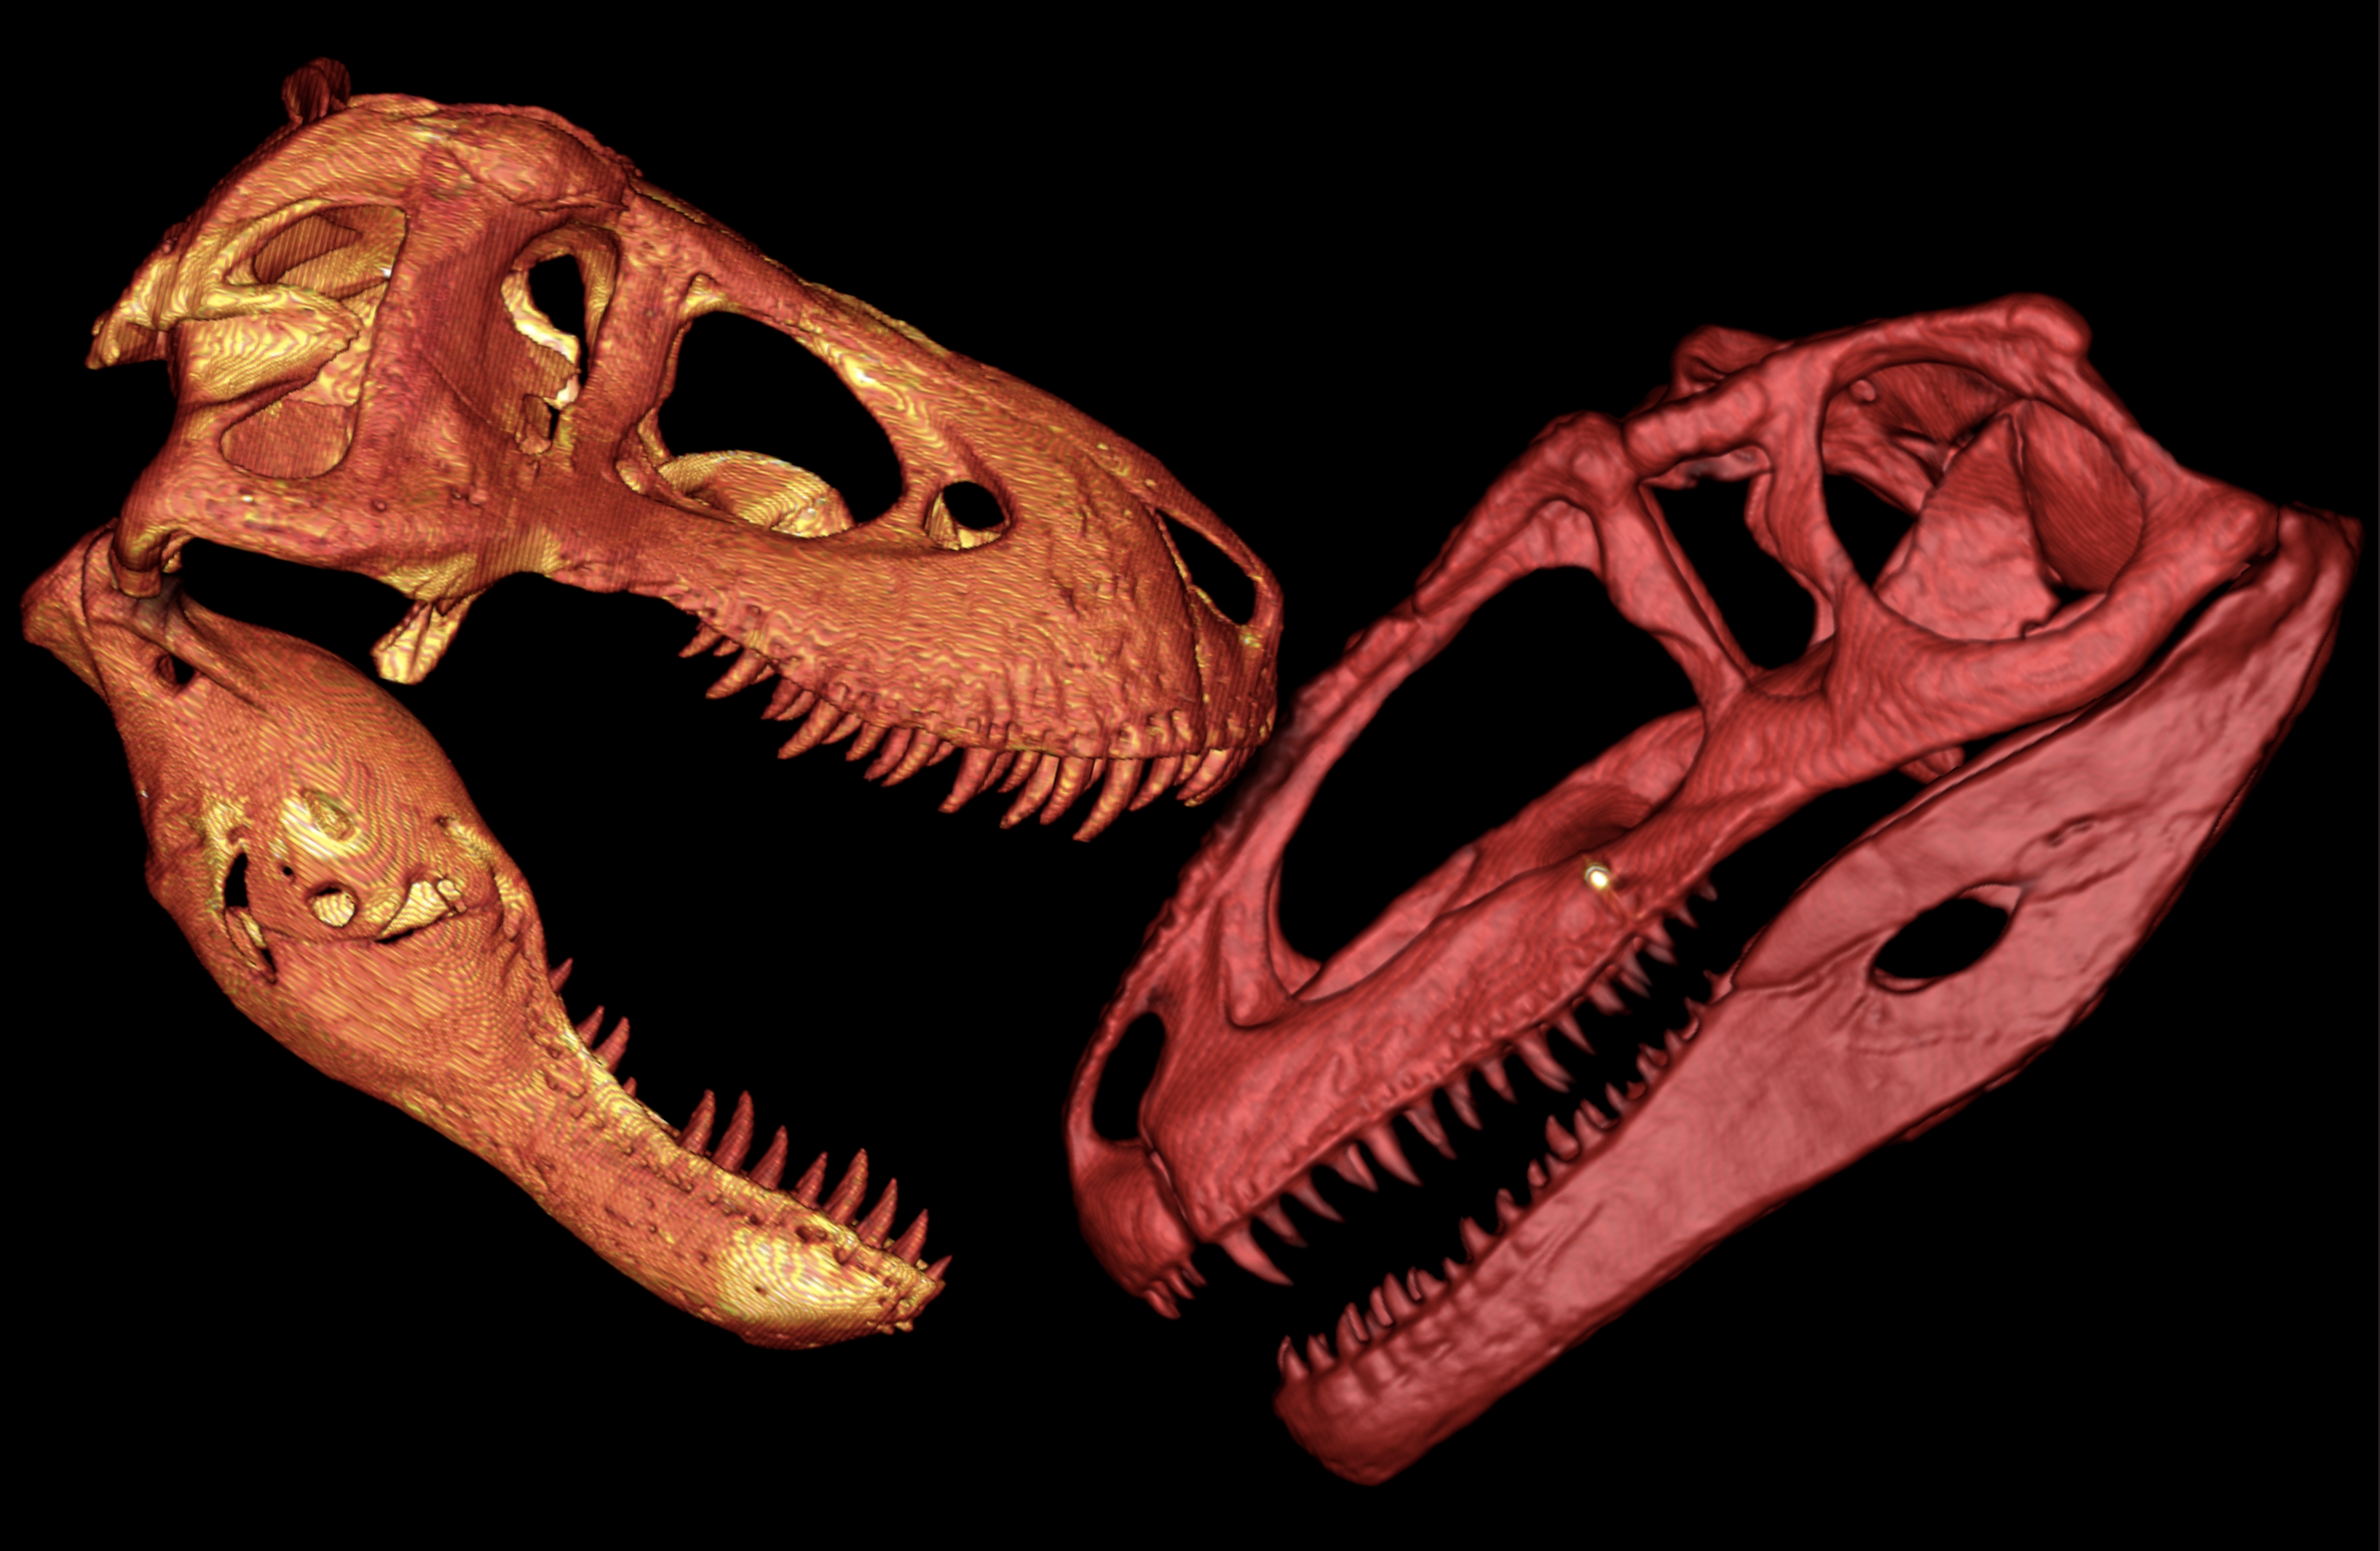 http://archosaurmusings.files.wordpress.com/2008/11/trex-giganotosaurus-comparison1.jpg